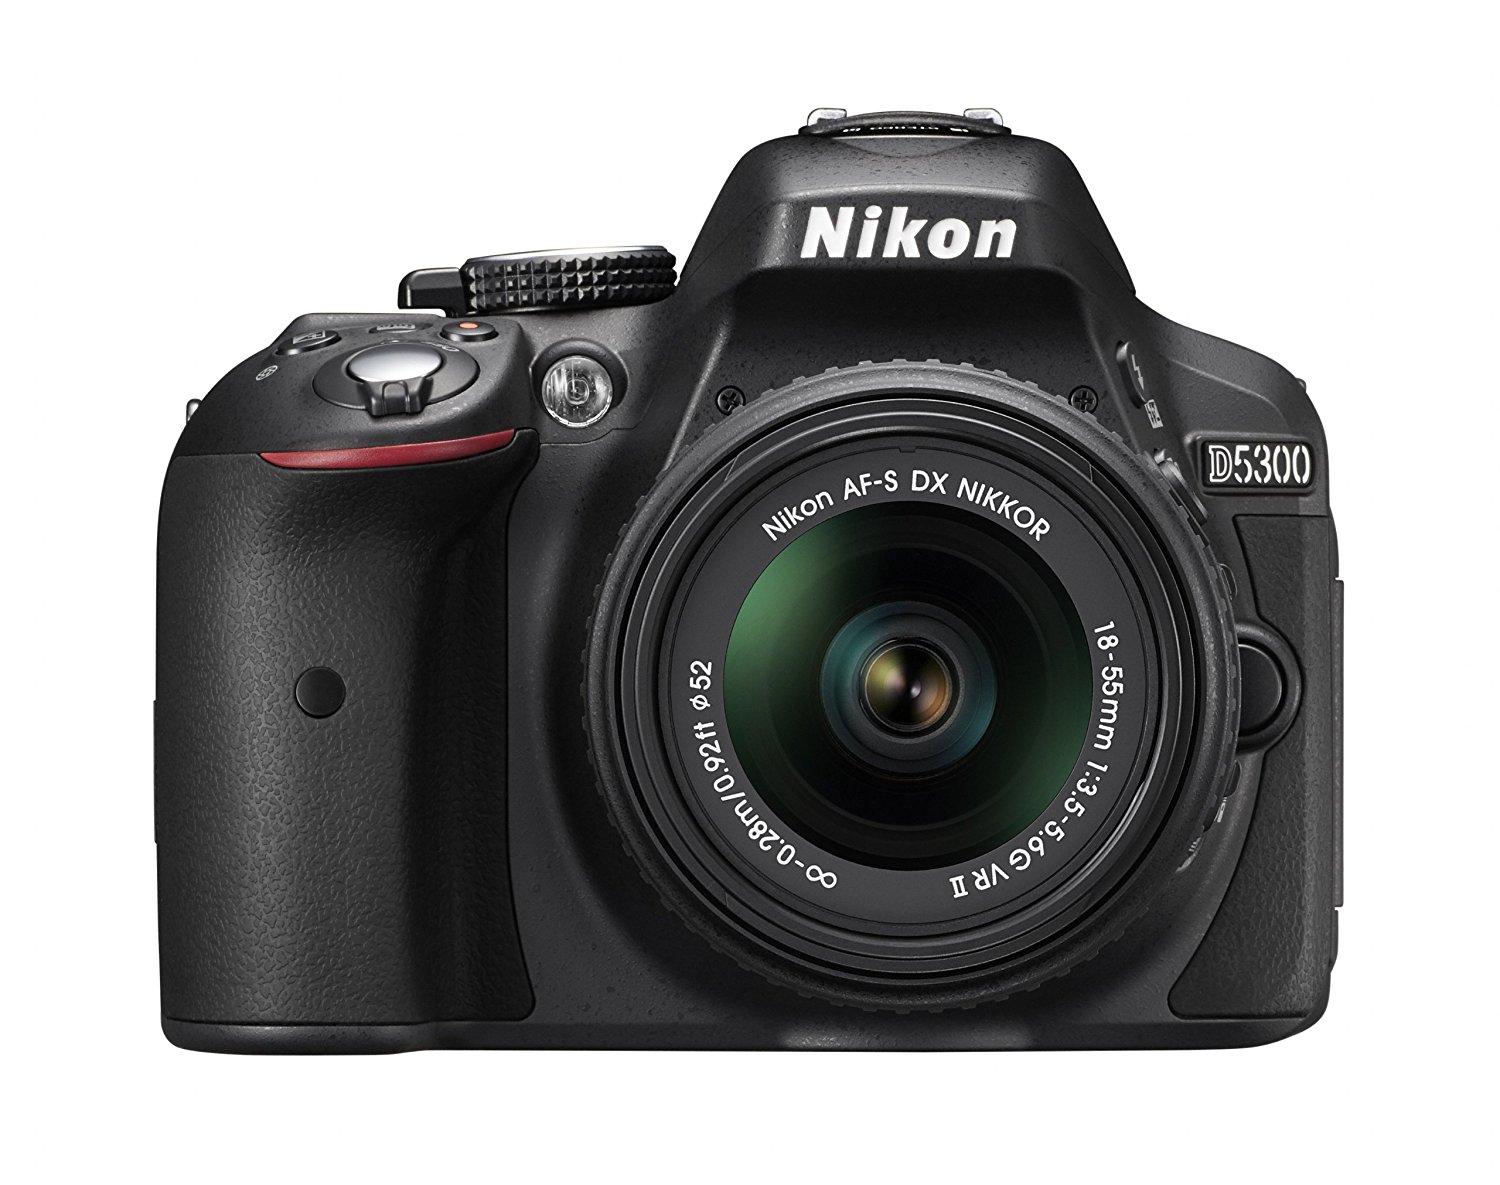 Nikon D5300 24.2 MP CMOS Digital SLR Camera with 18-55m...